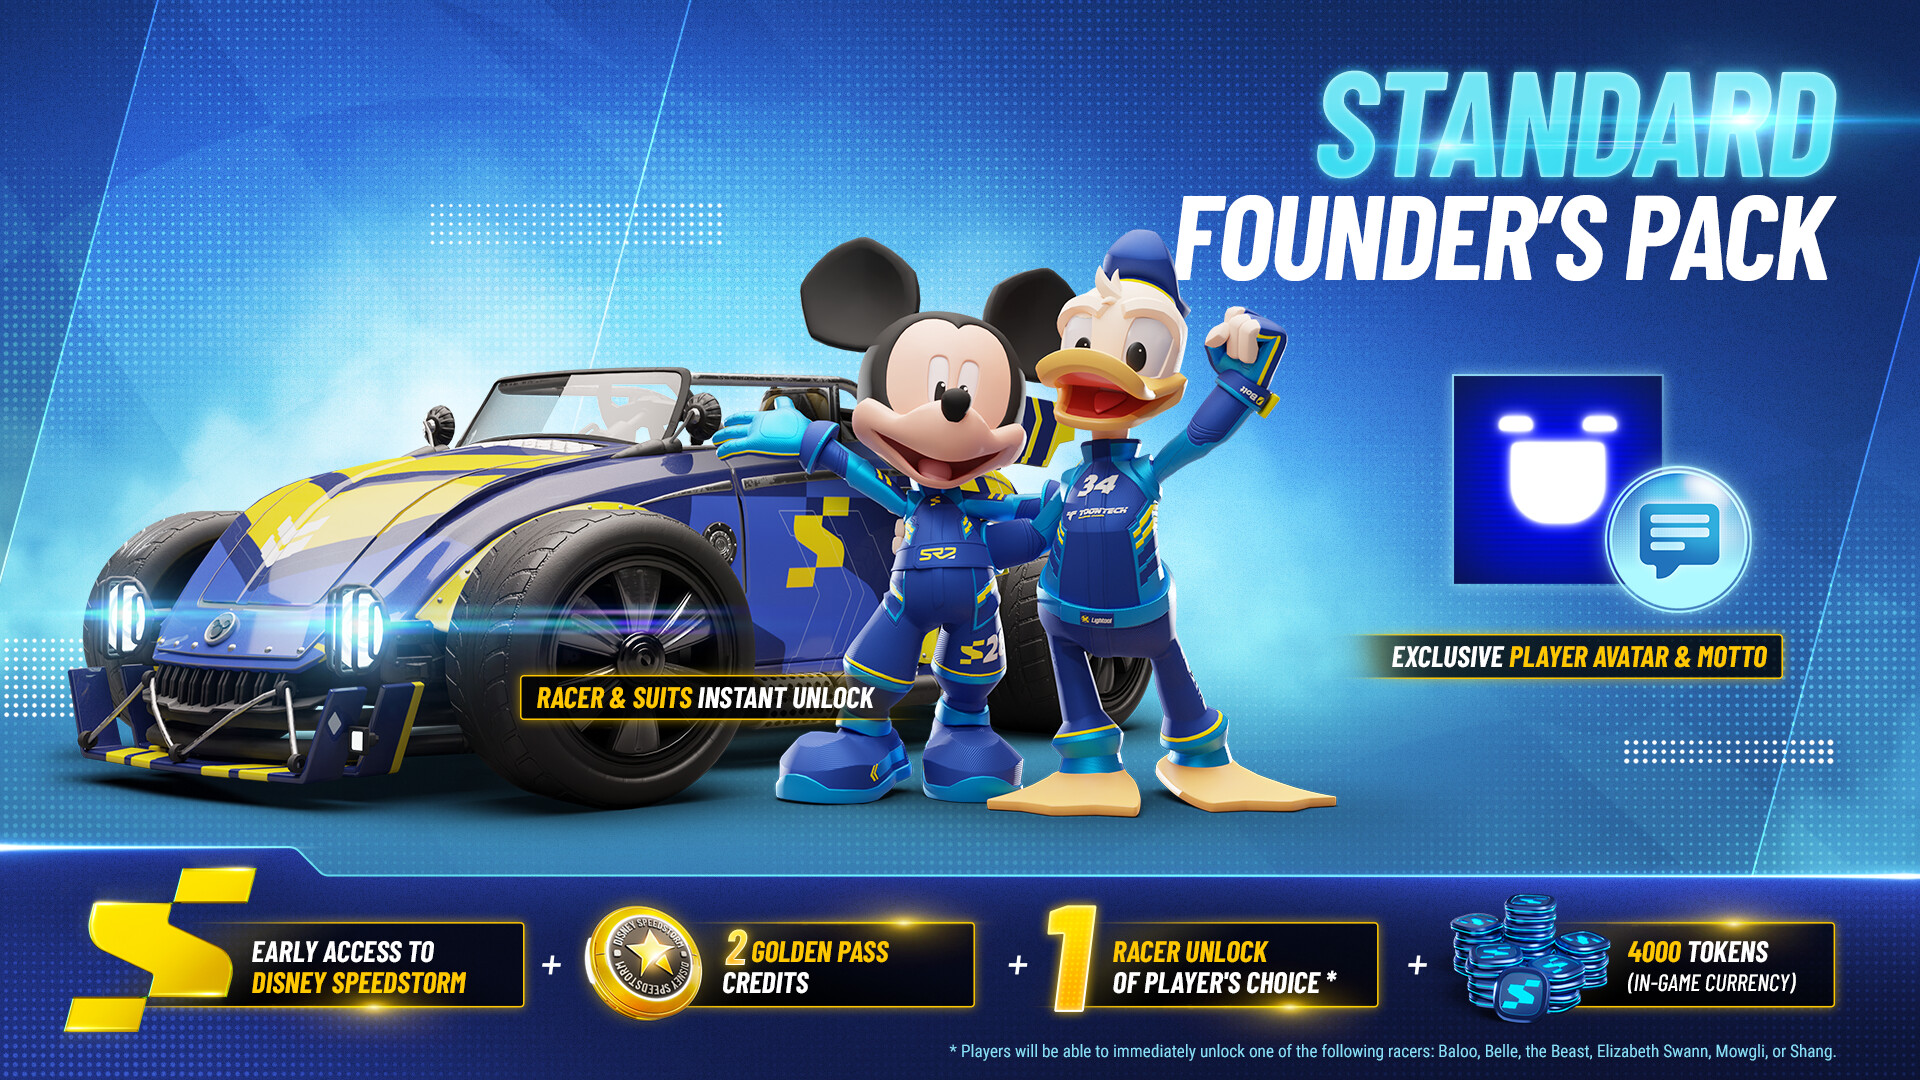 Disney Speedstorm - Standard Founder’s Pack Featured Screenshot #1